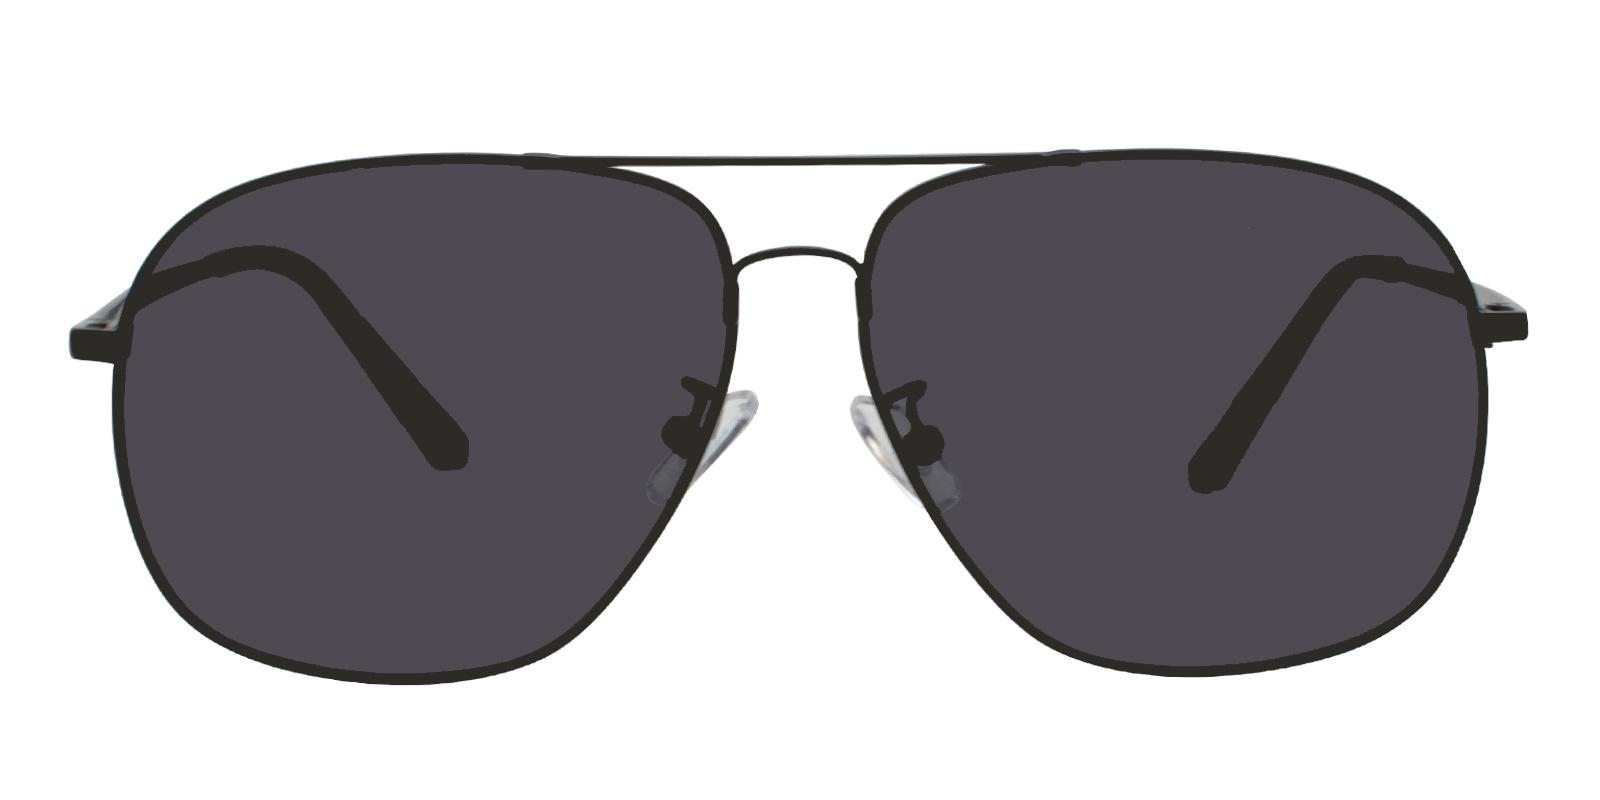 James Black Metal NosePads , Sunglasses Frames from ABBE Glasses